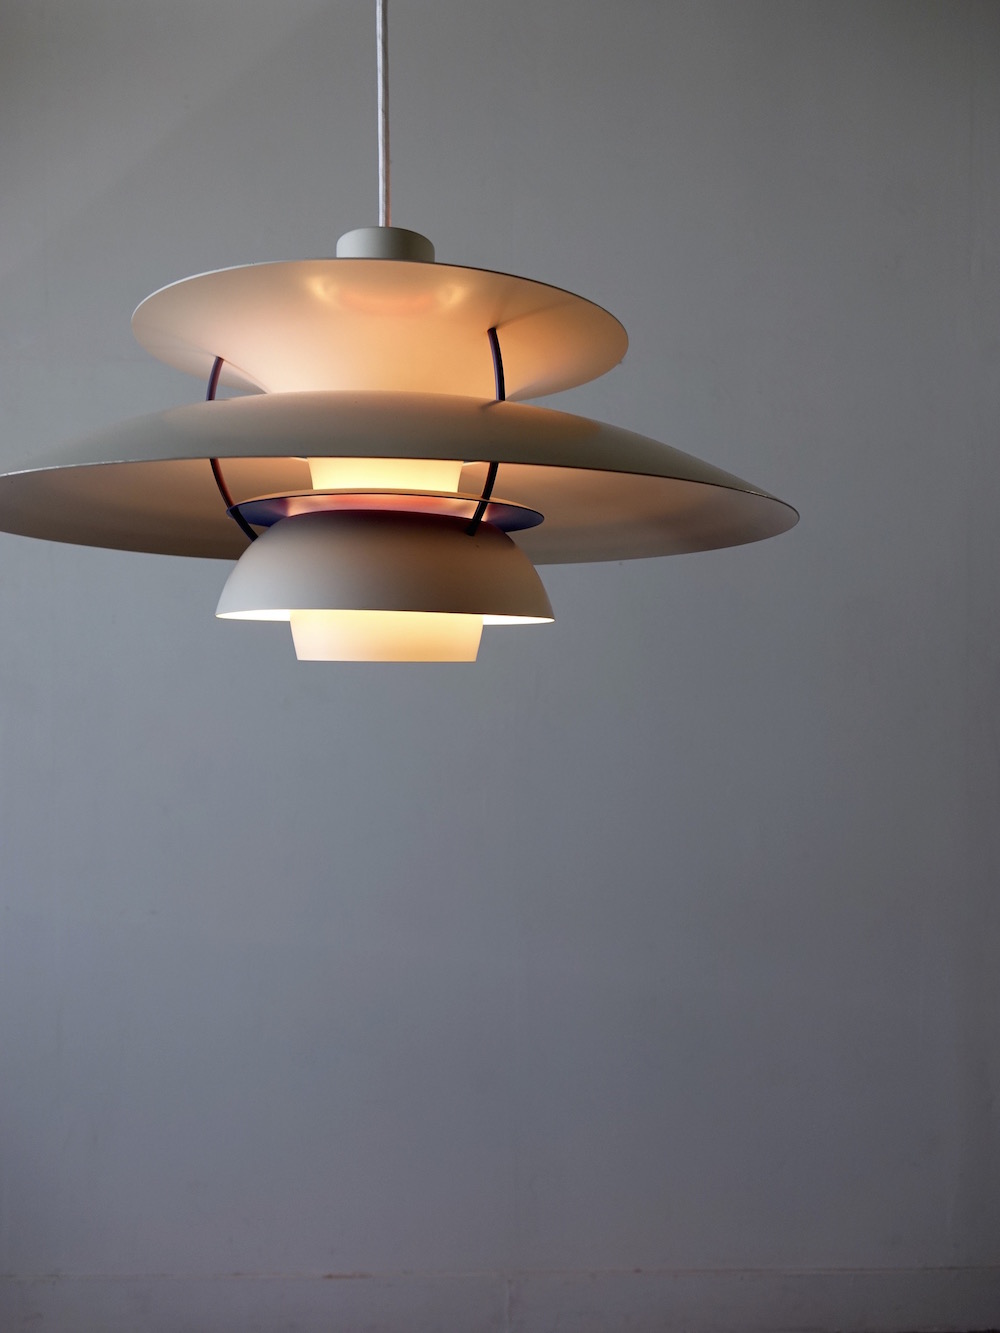 PH5 Pendant lamp by Poul Henningsen for Louis Poulsen